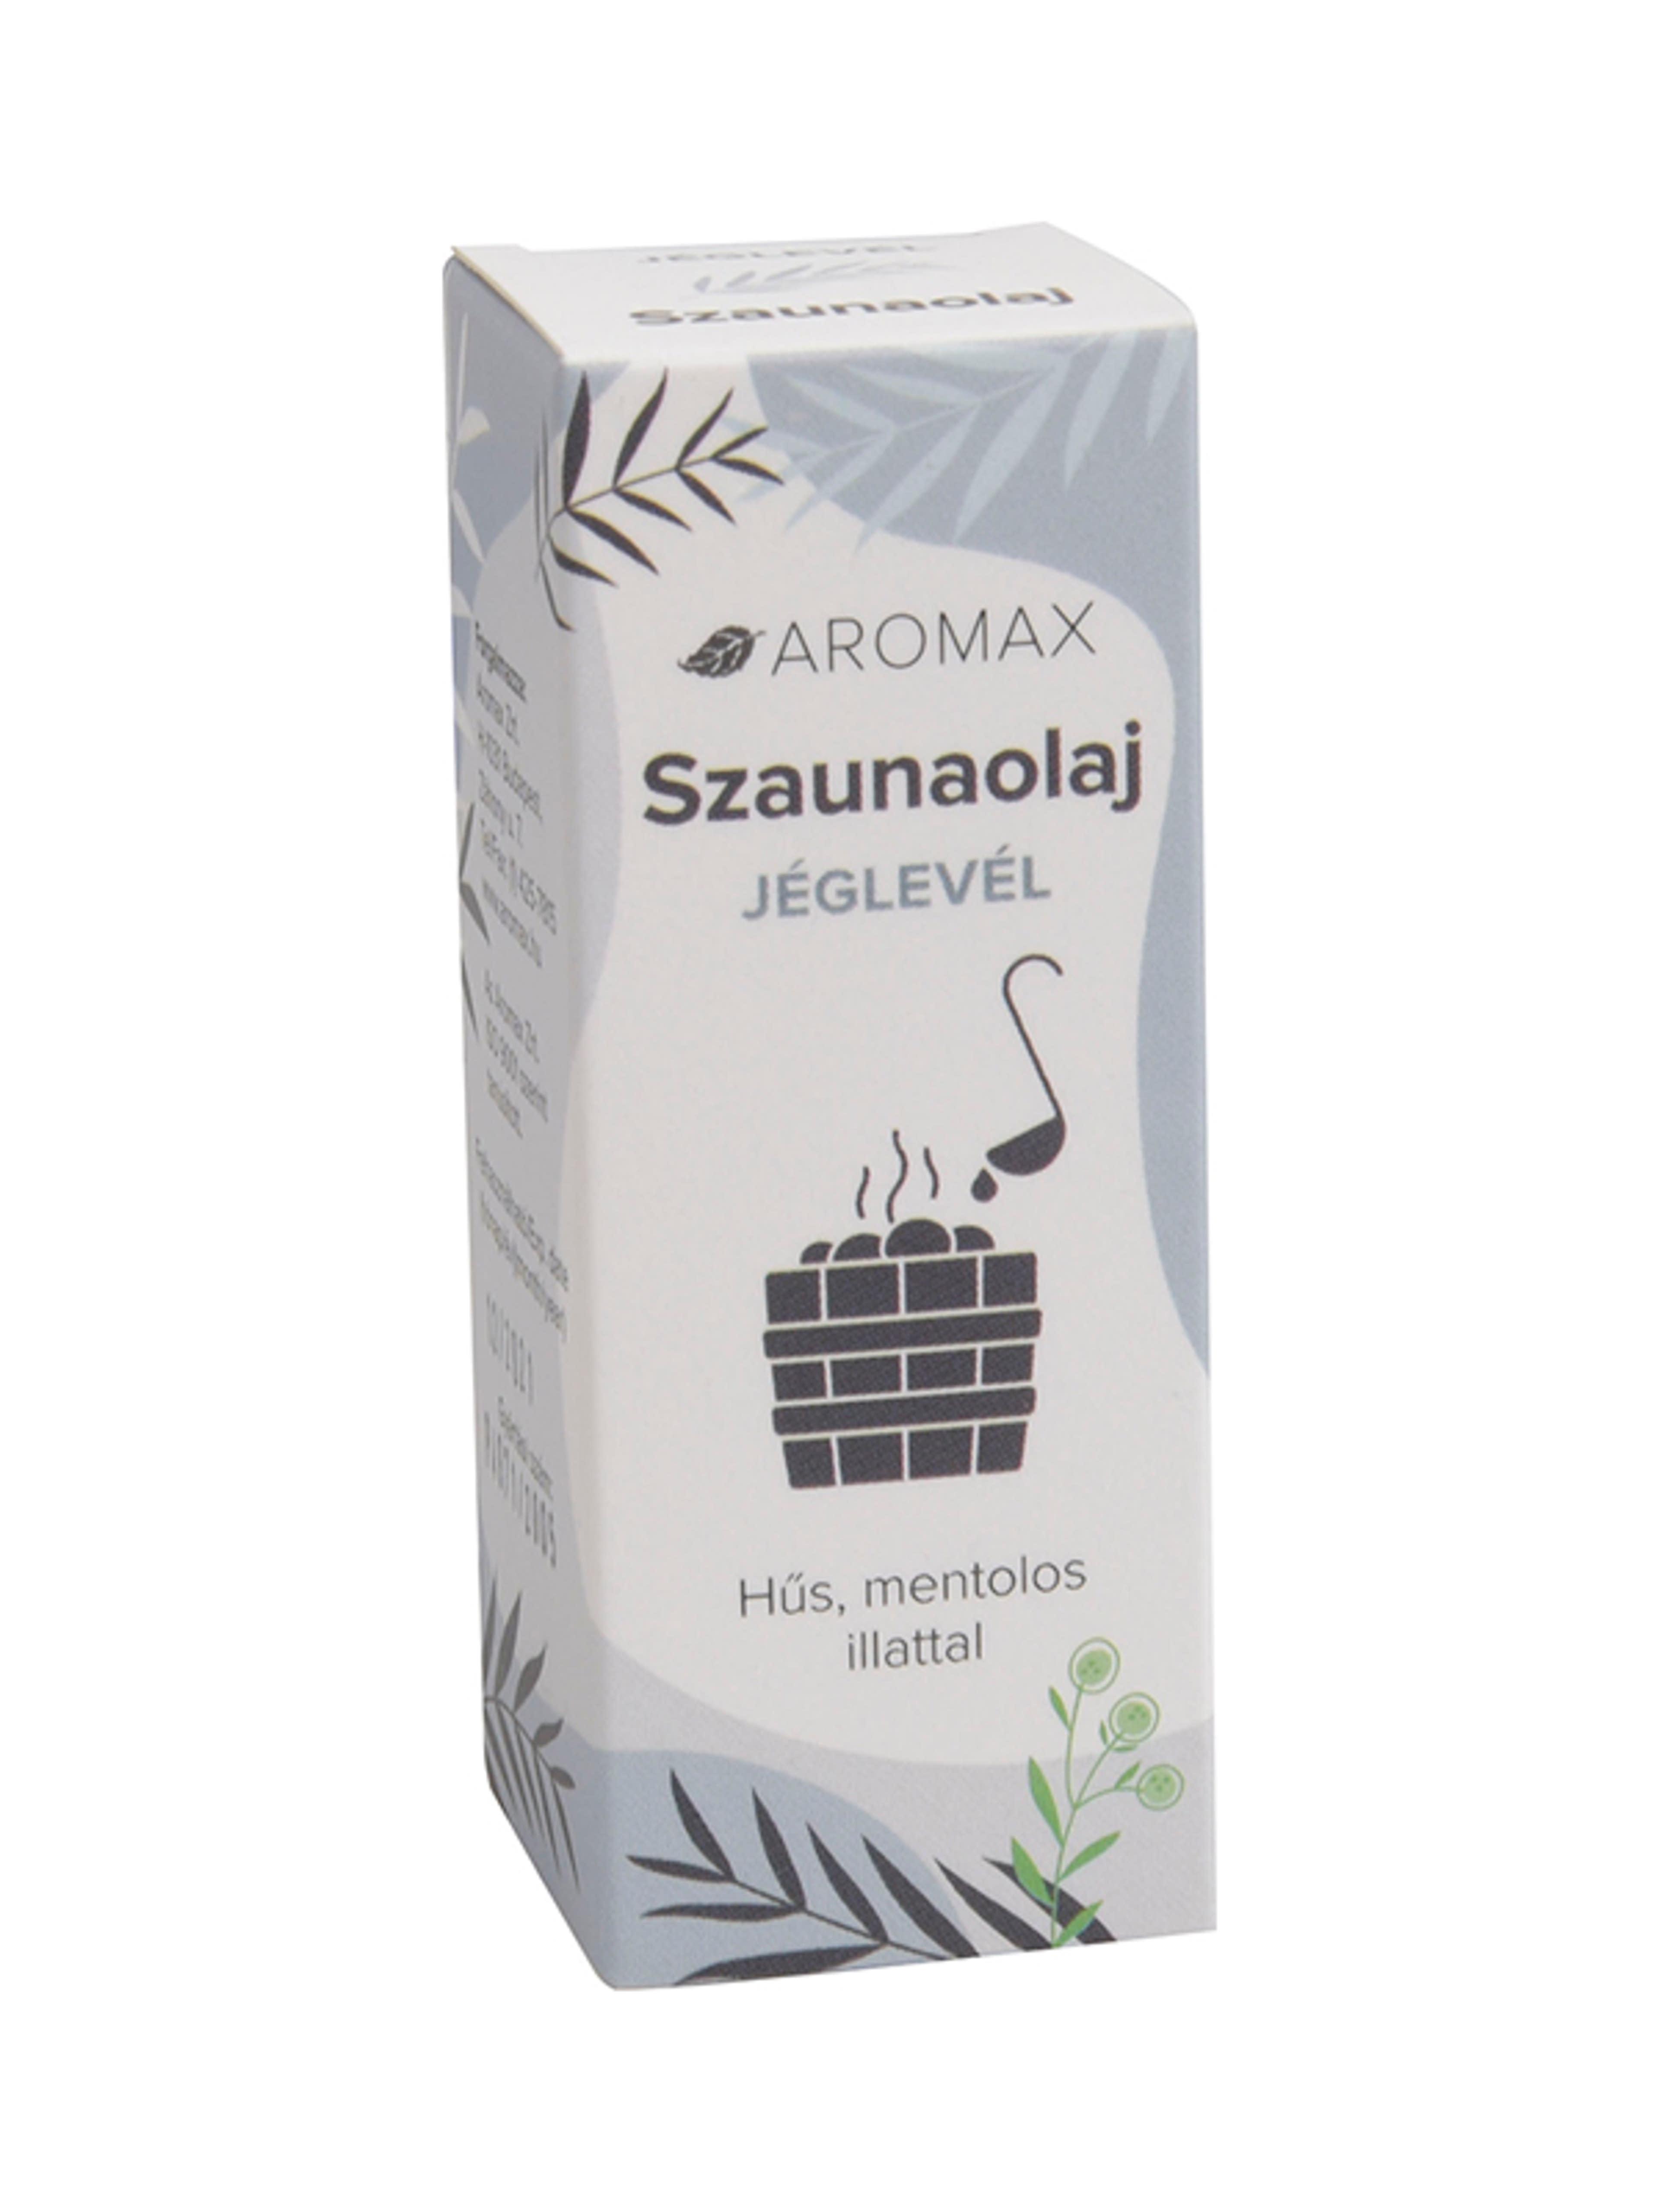 Aromax szaunaolaj jéglevél - 20 ml-1